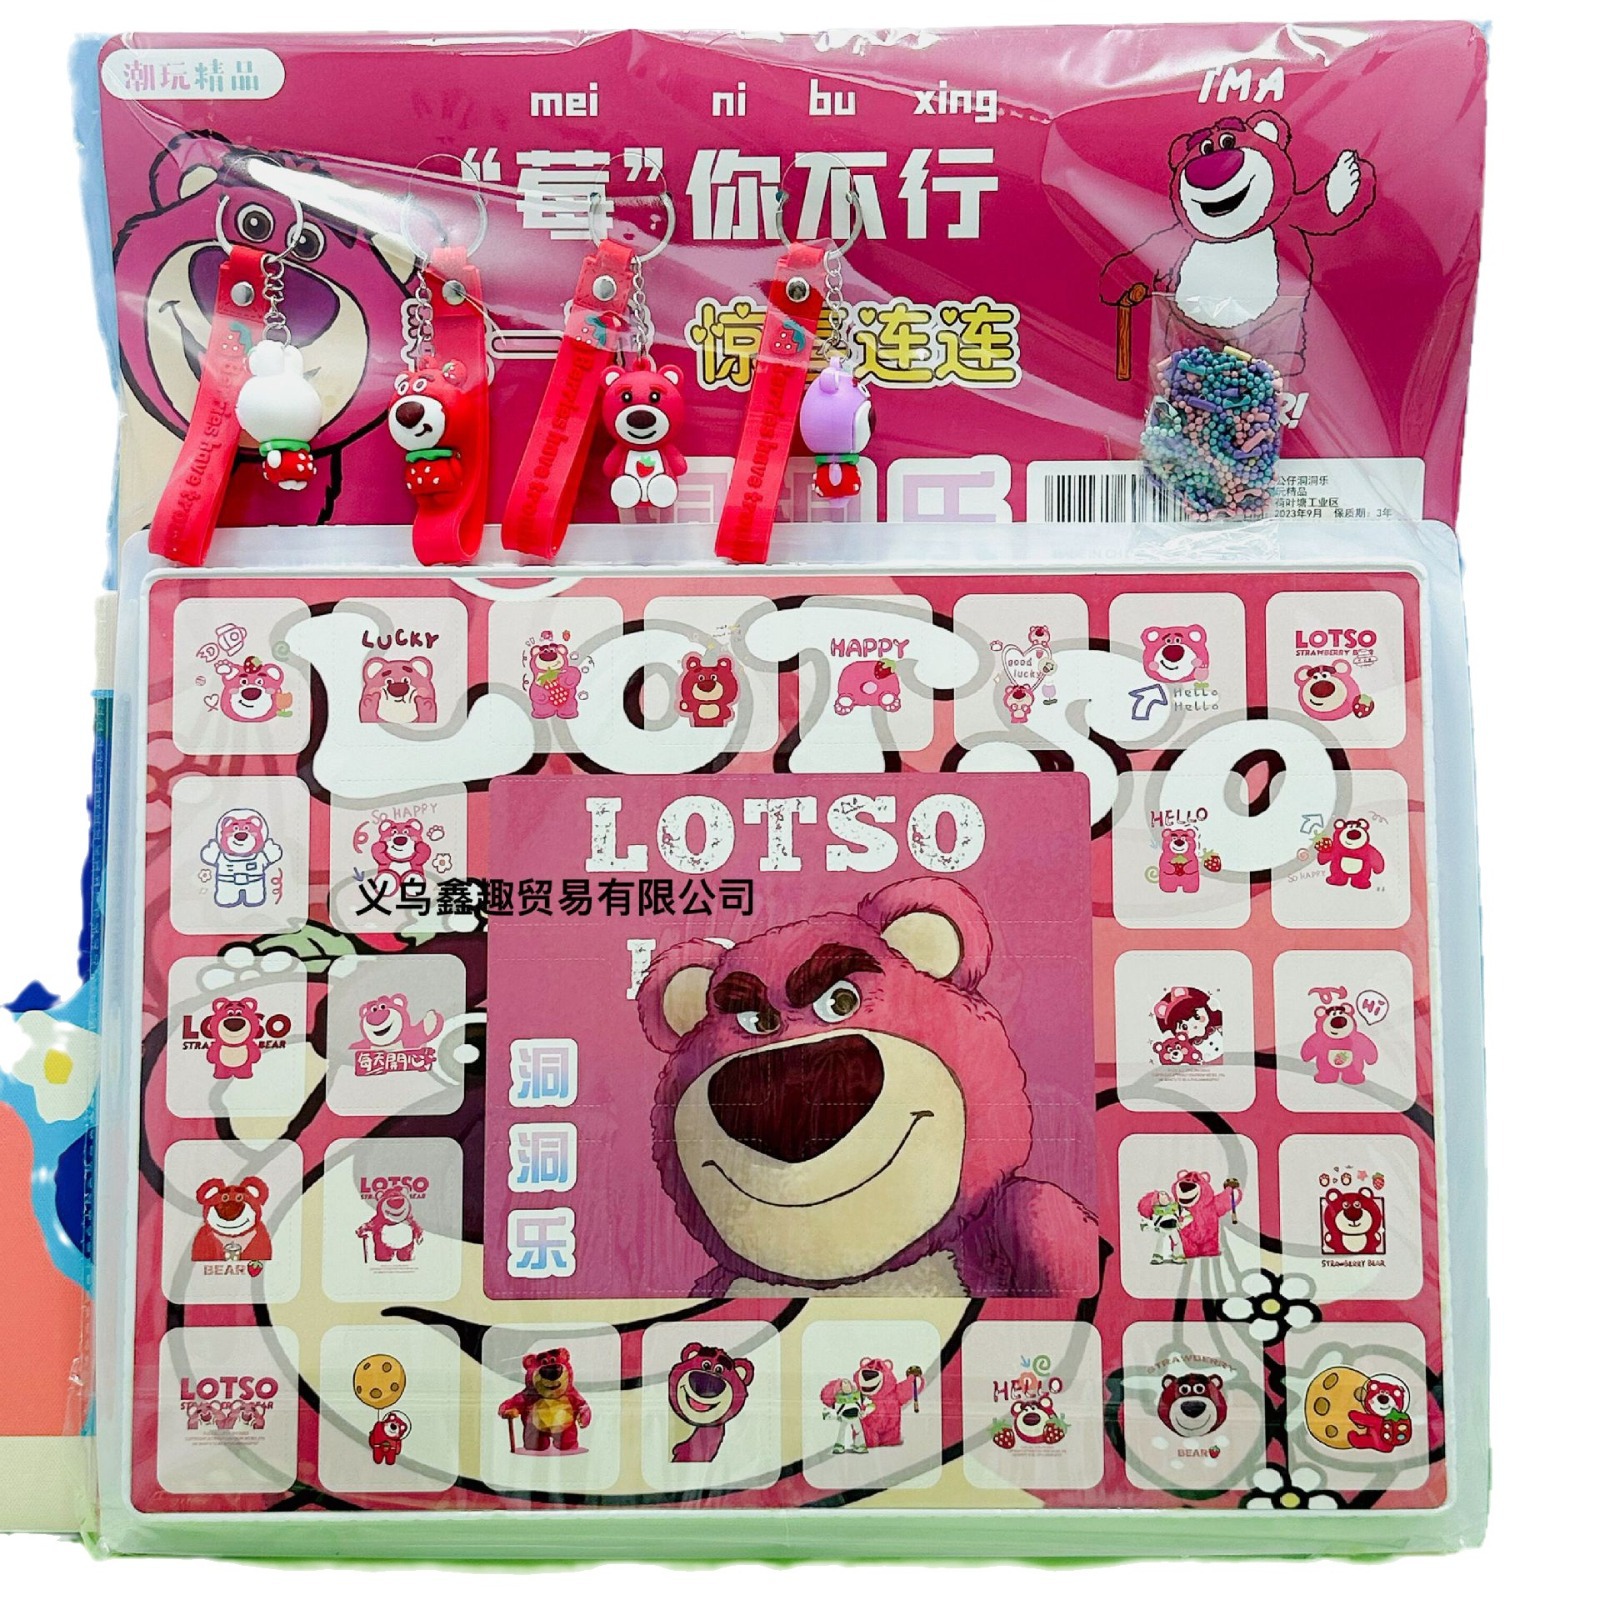 Second Generation 40 into Sanliou Blind Box Hole Music Primary School Children Cartoon Reward Small Gift Tik Tok Toys Hot Sale